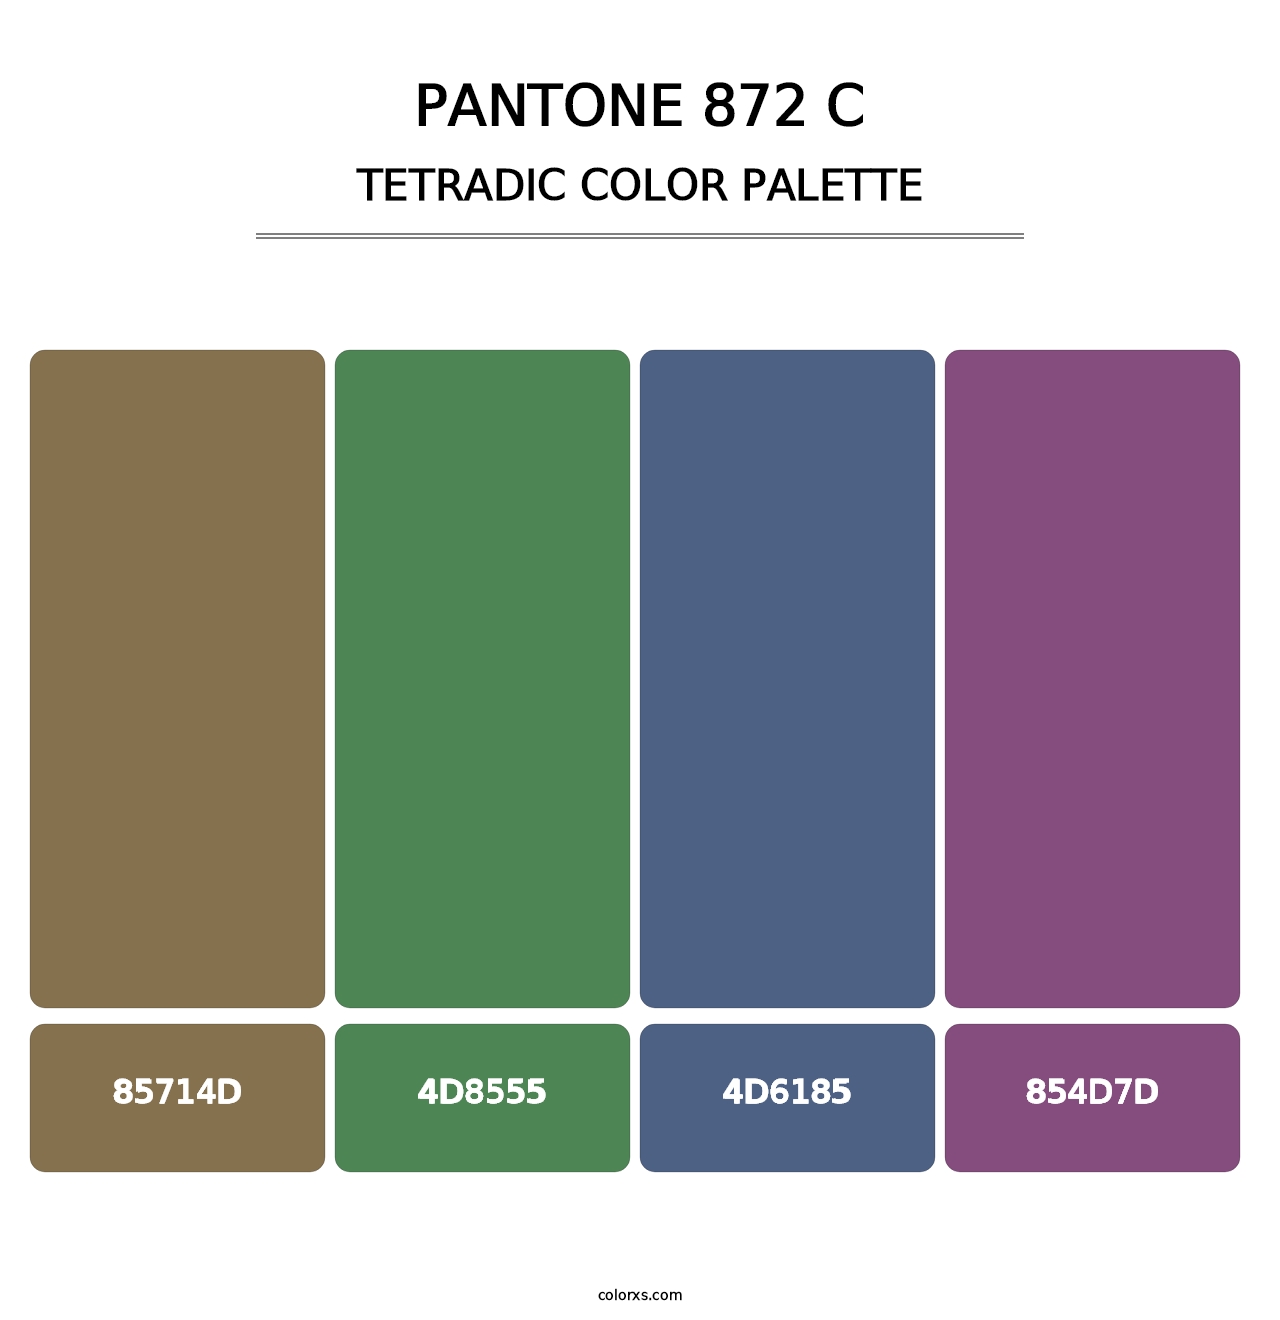 PANTONE 872 C - Tetradic Color Palette